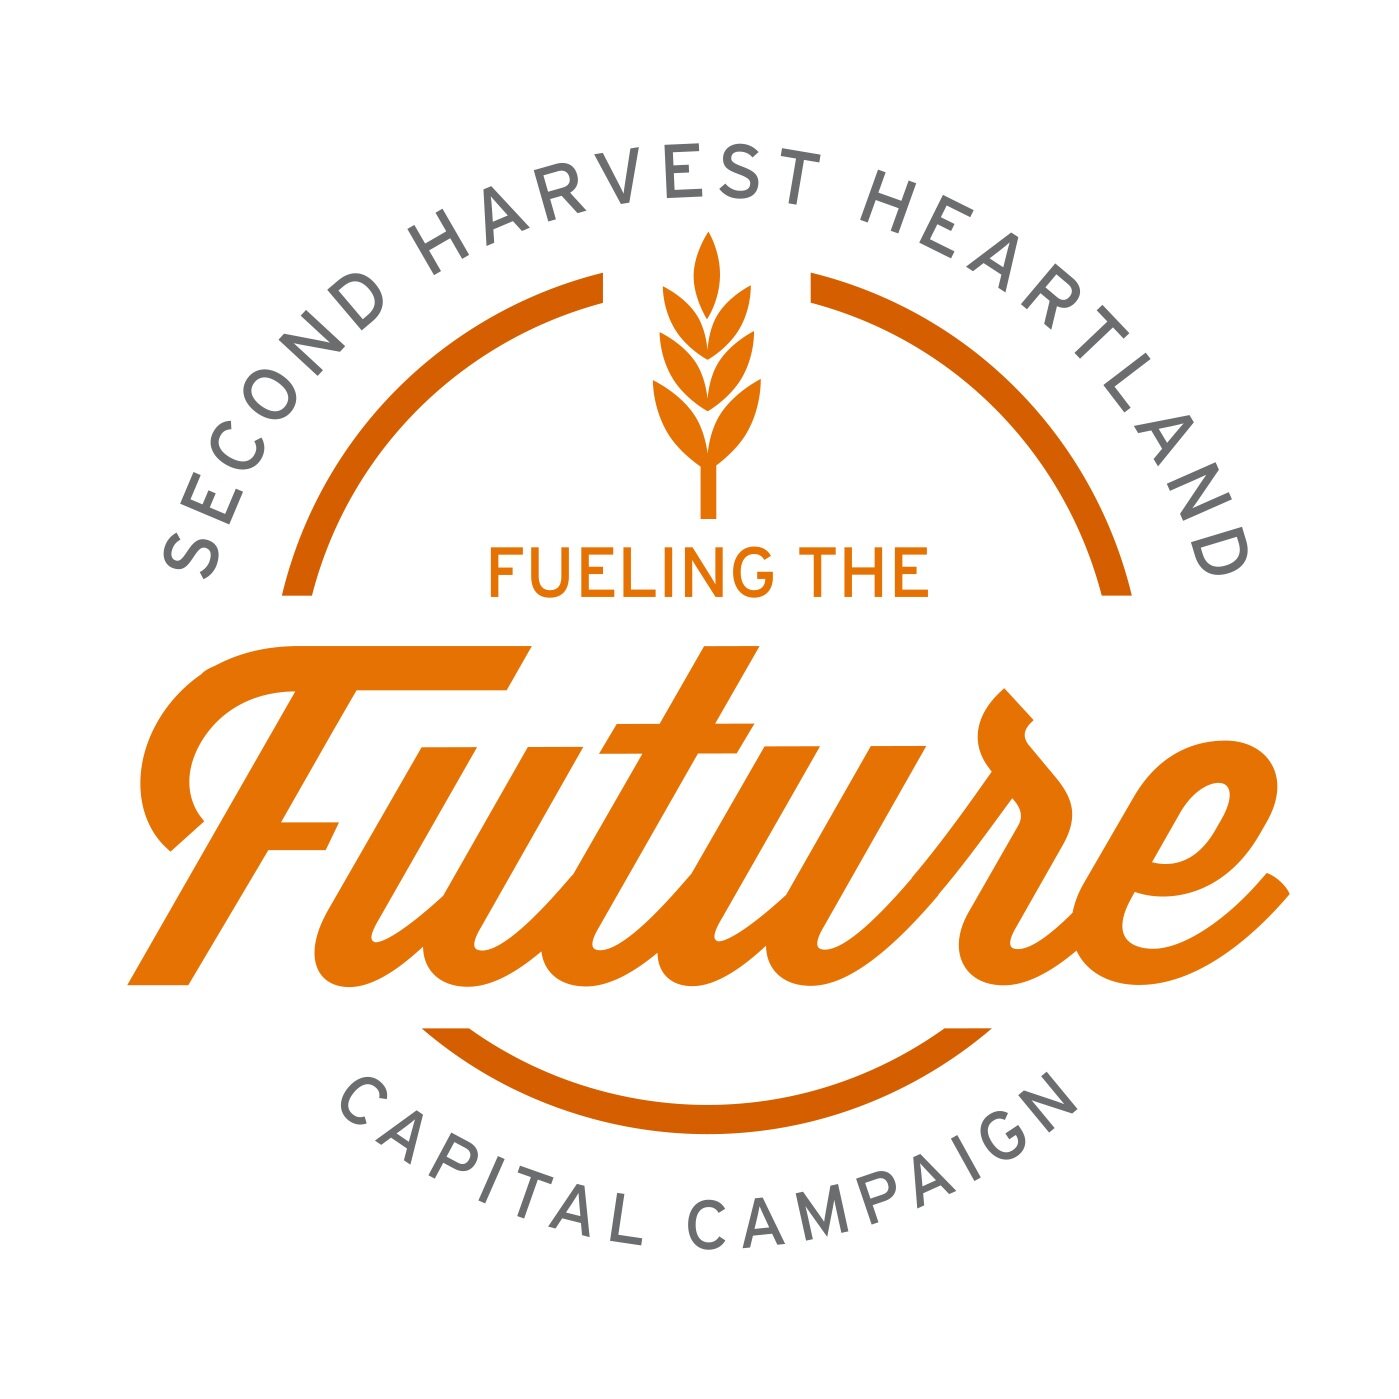 Second Harvest Heartland Capital Campaign